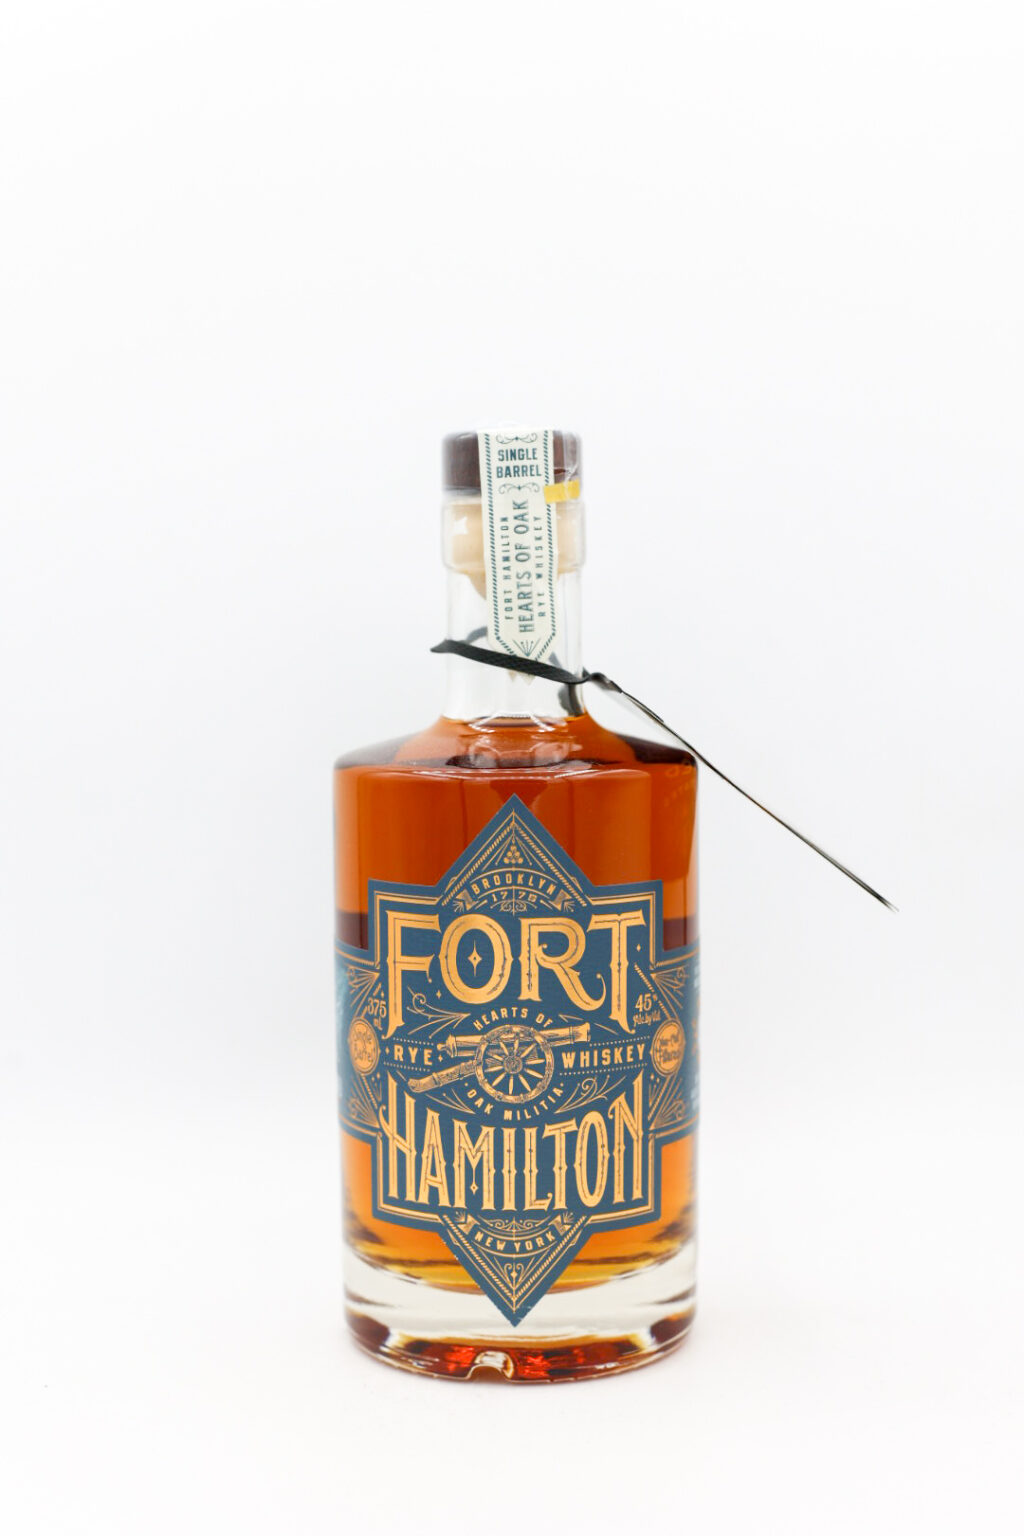 Fort Hamilton Single Barrel Rye Whiskey 375ml